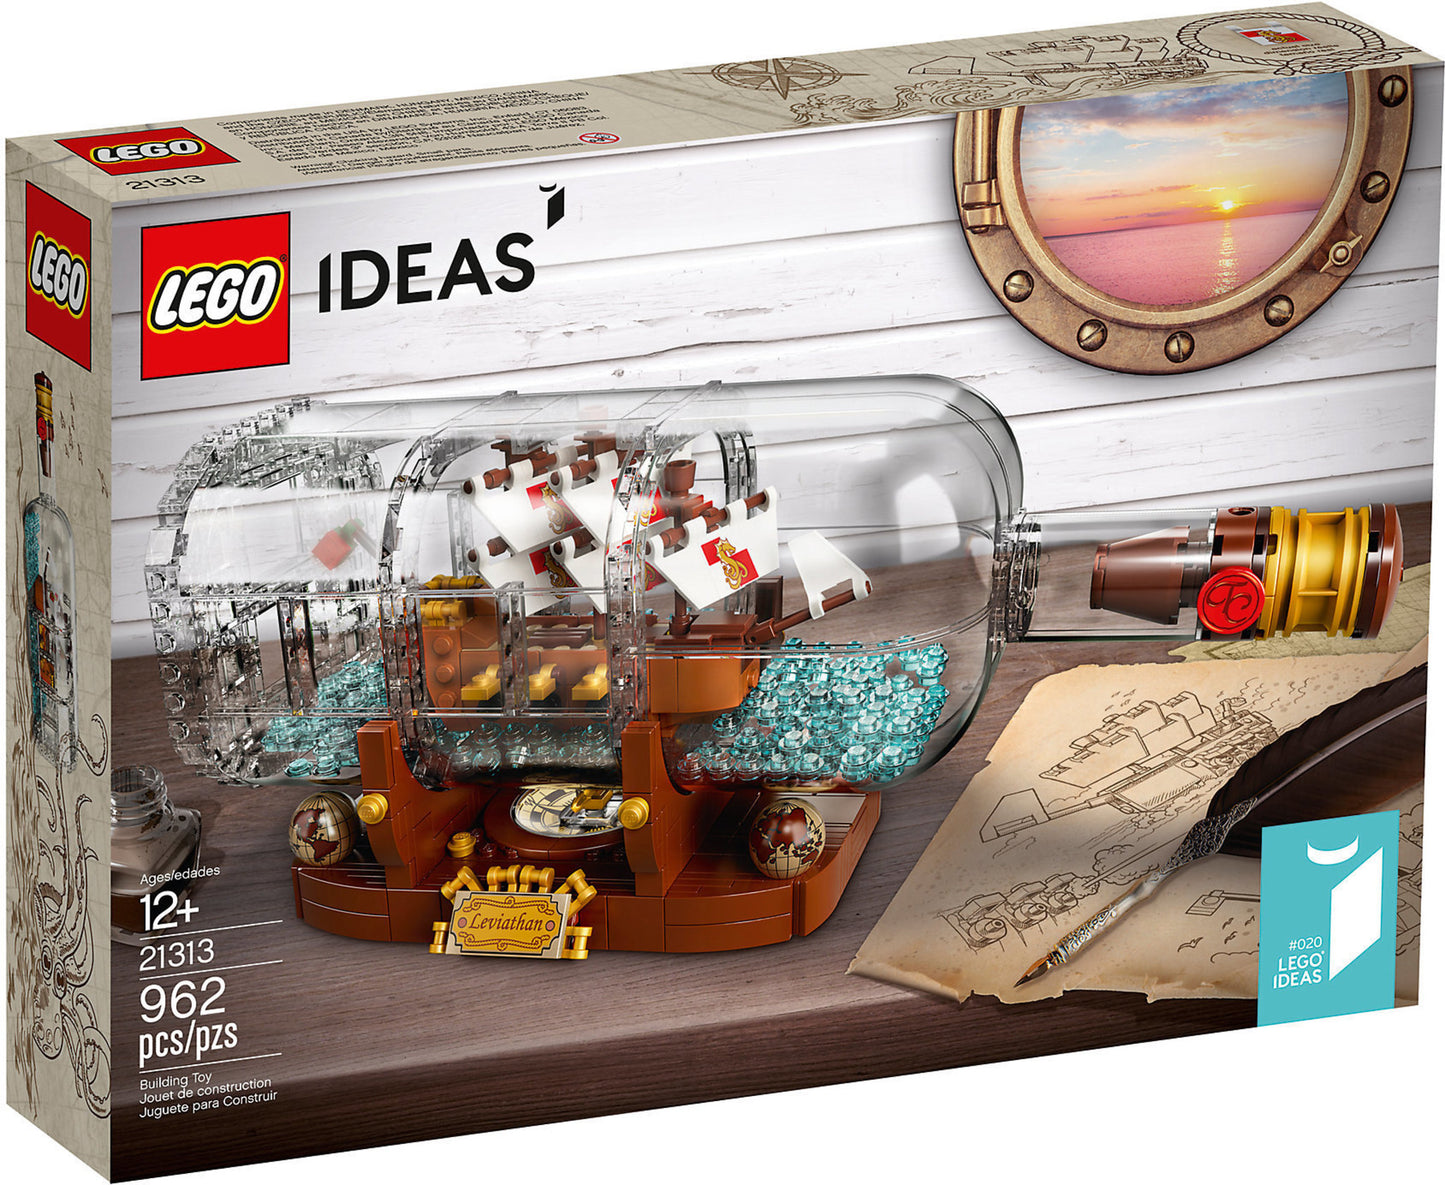 21313 LEGO Ideas - Nave In Bottiglia